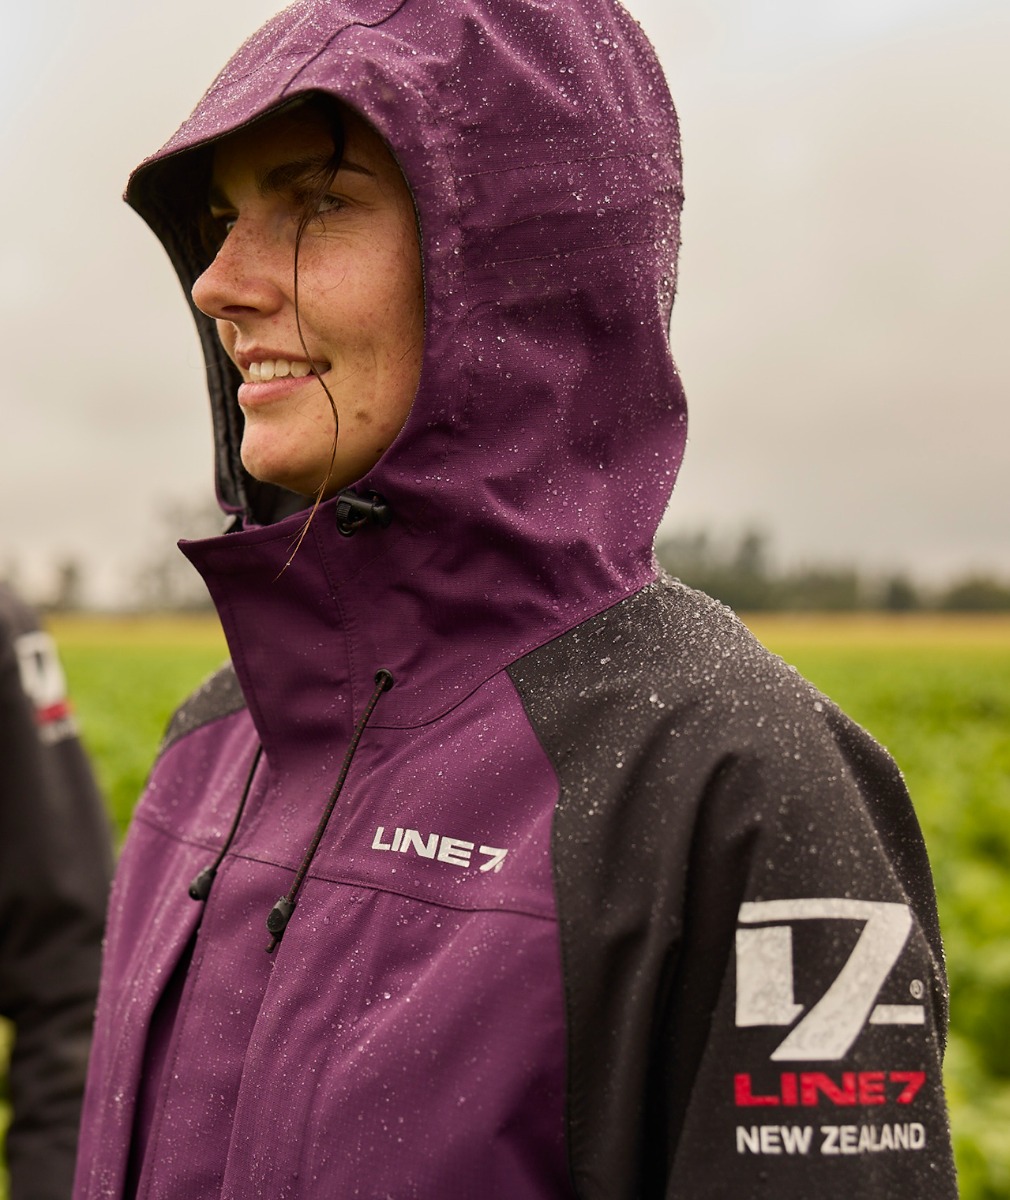 Line 7 Women's Territory Storm Pro20 Waterproof Jacket